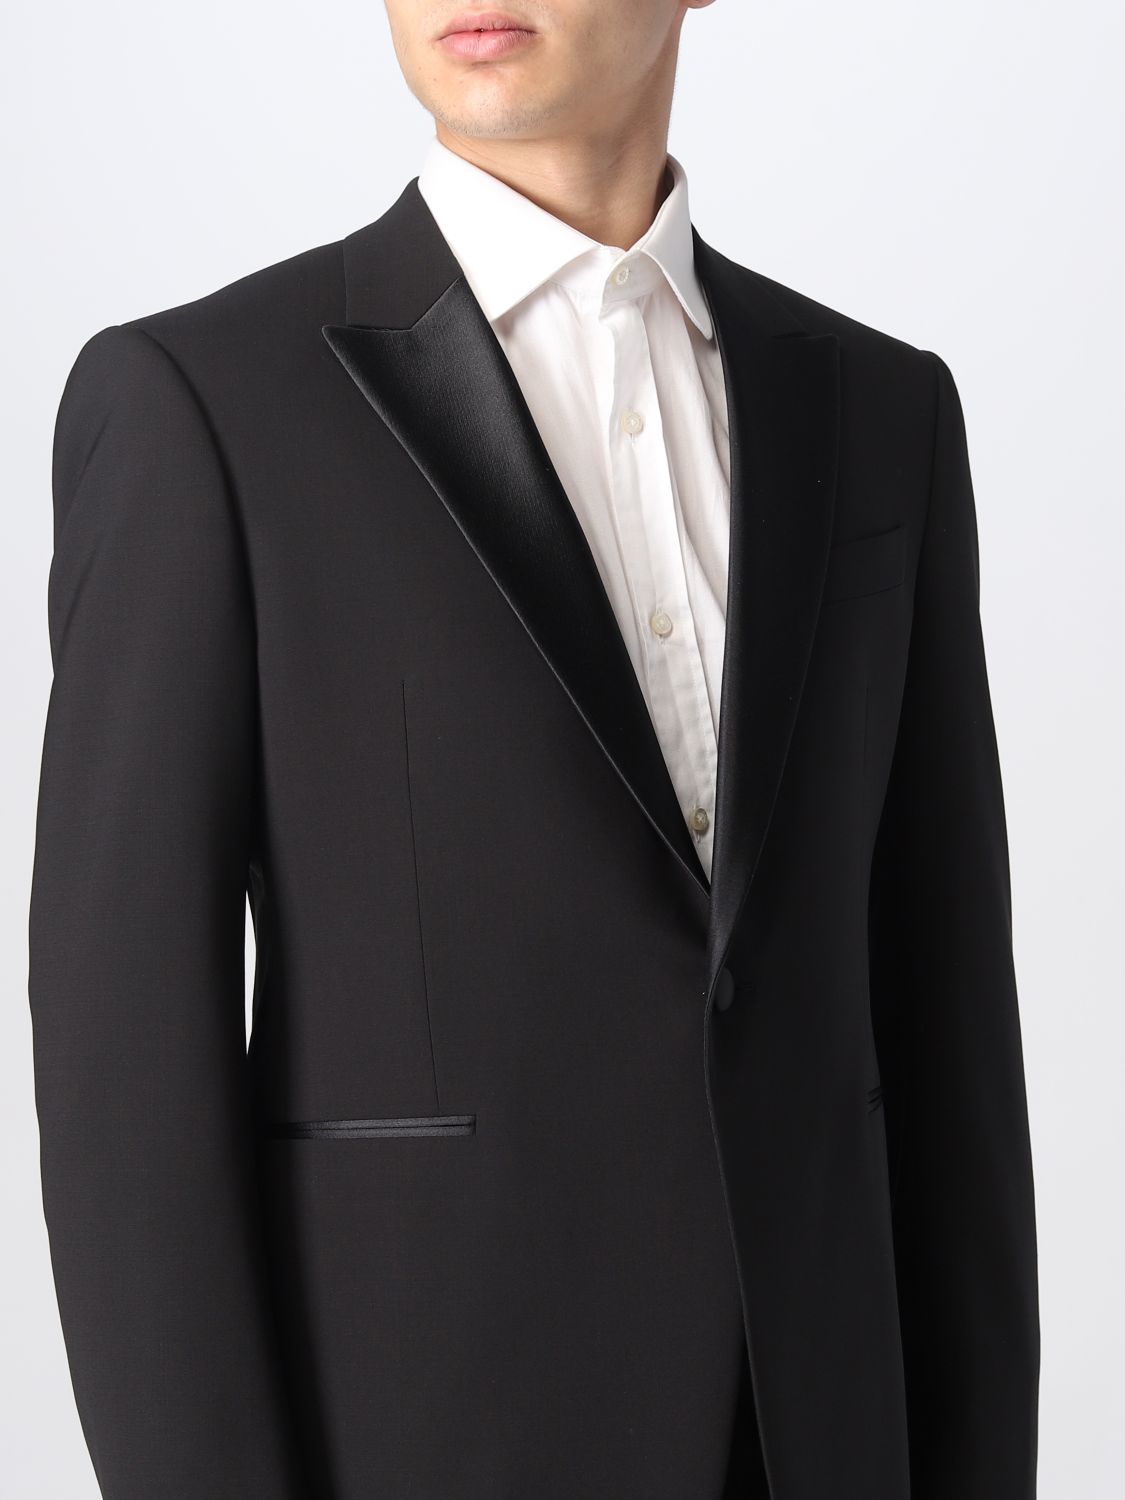 EMPORIO ARMANI: suit for man - Black | Emporio Armani suit D41VMU01506  online on 